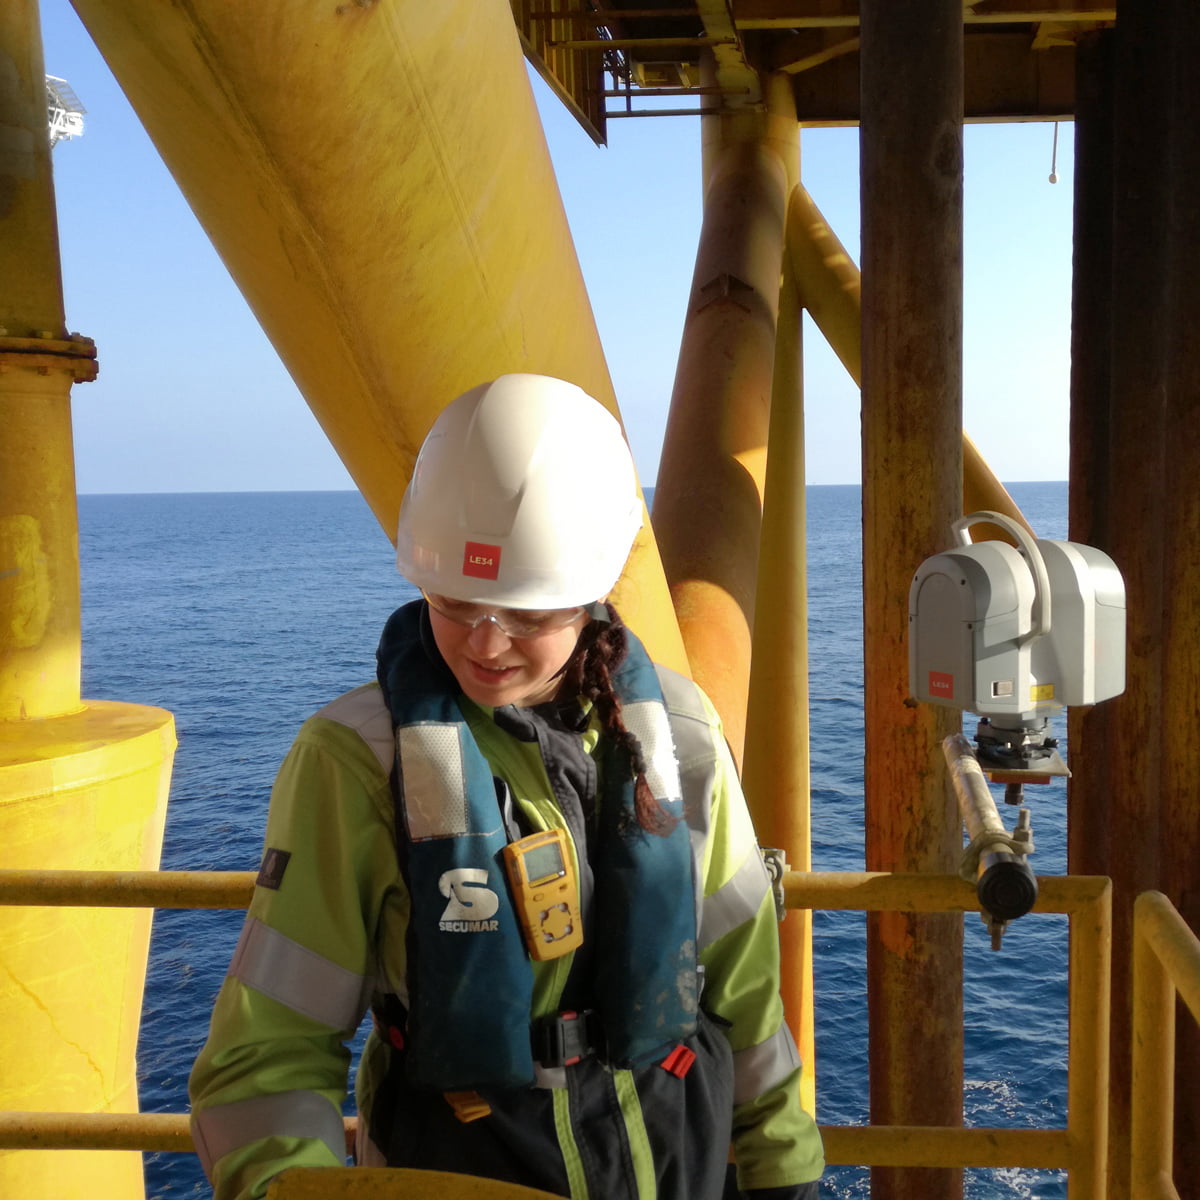 LE34 landinspektør offshore gas- og olieplatforme